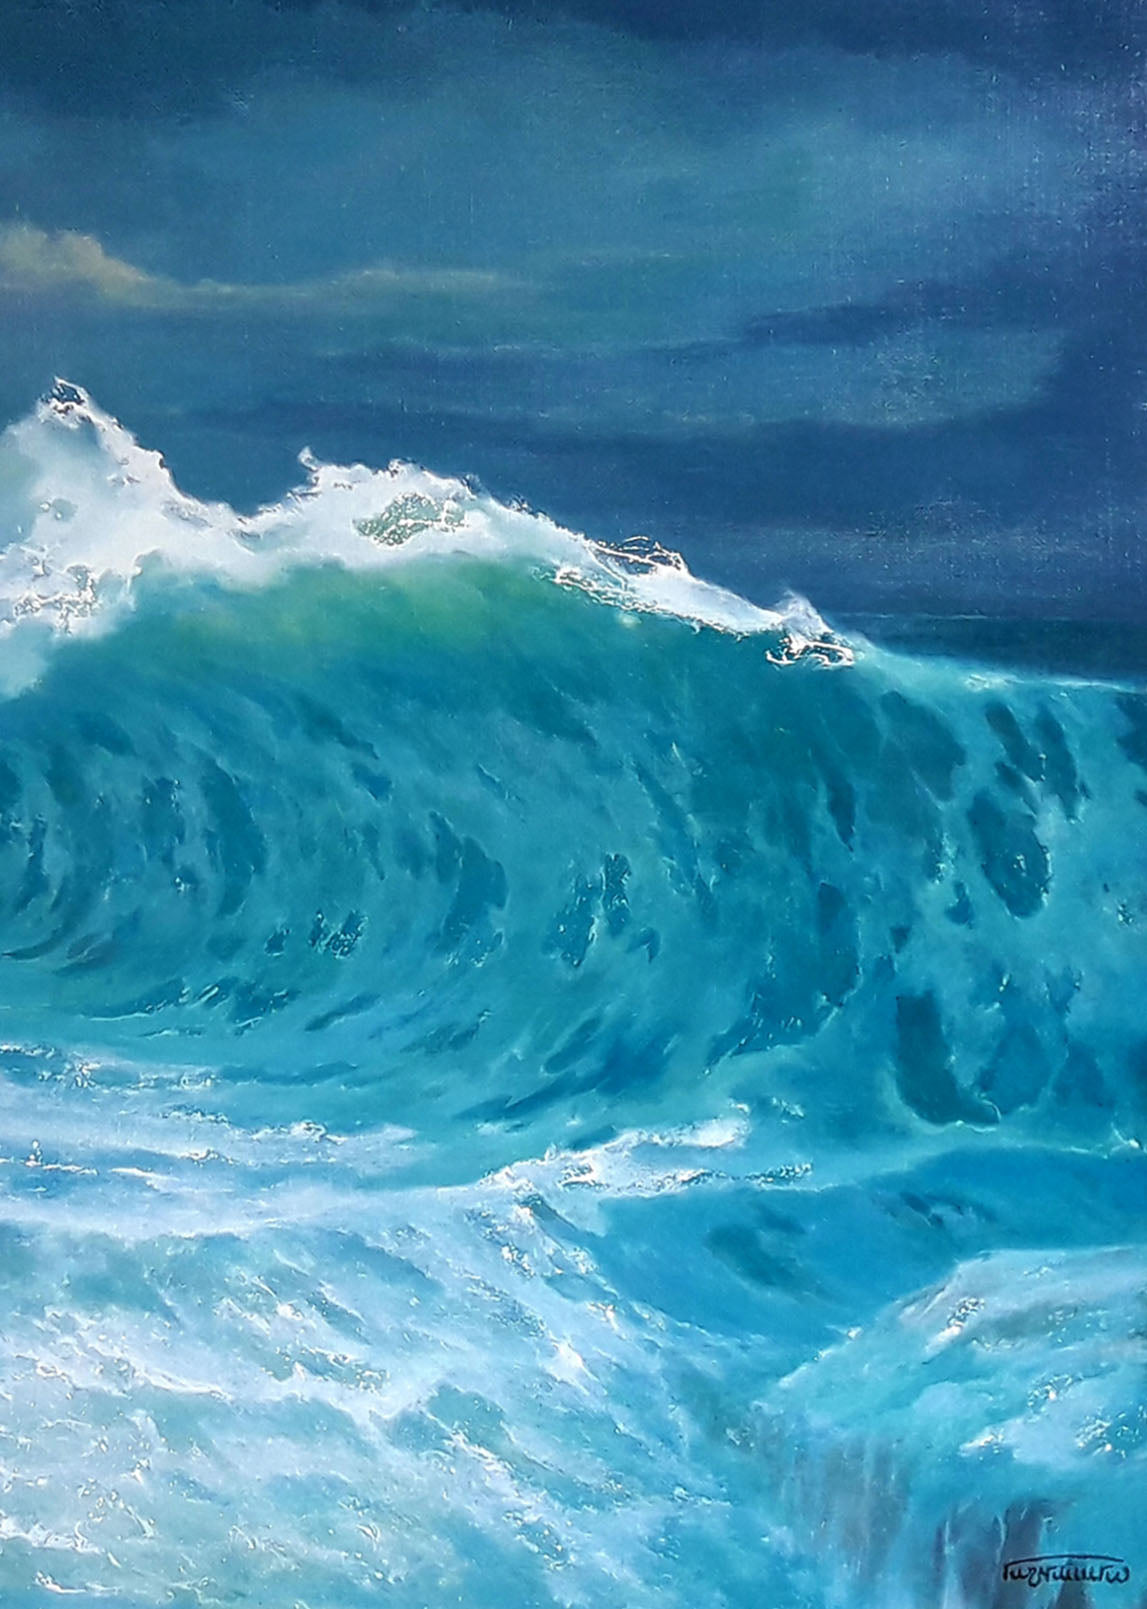 Oil painting Seascape with waves Vasily Korkishko